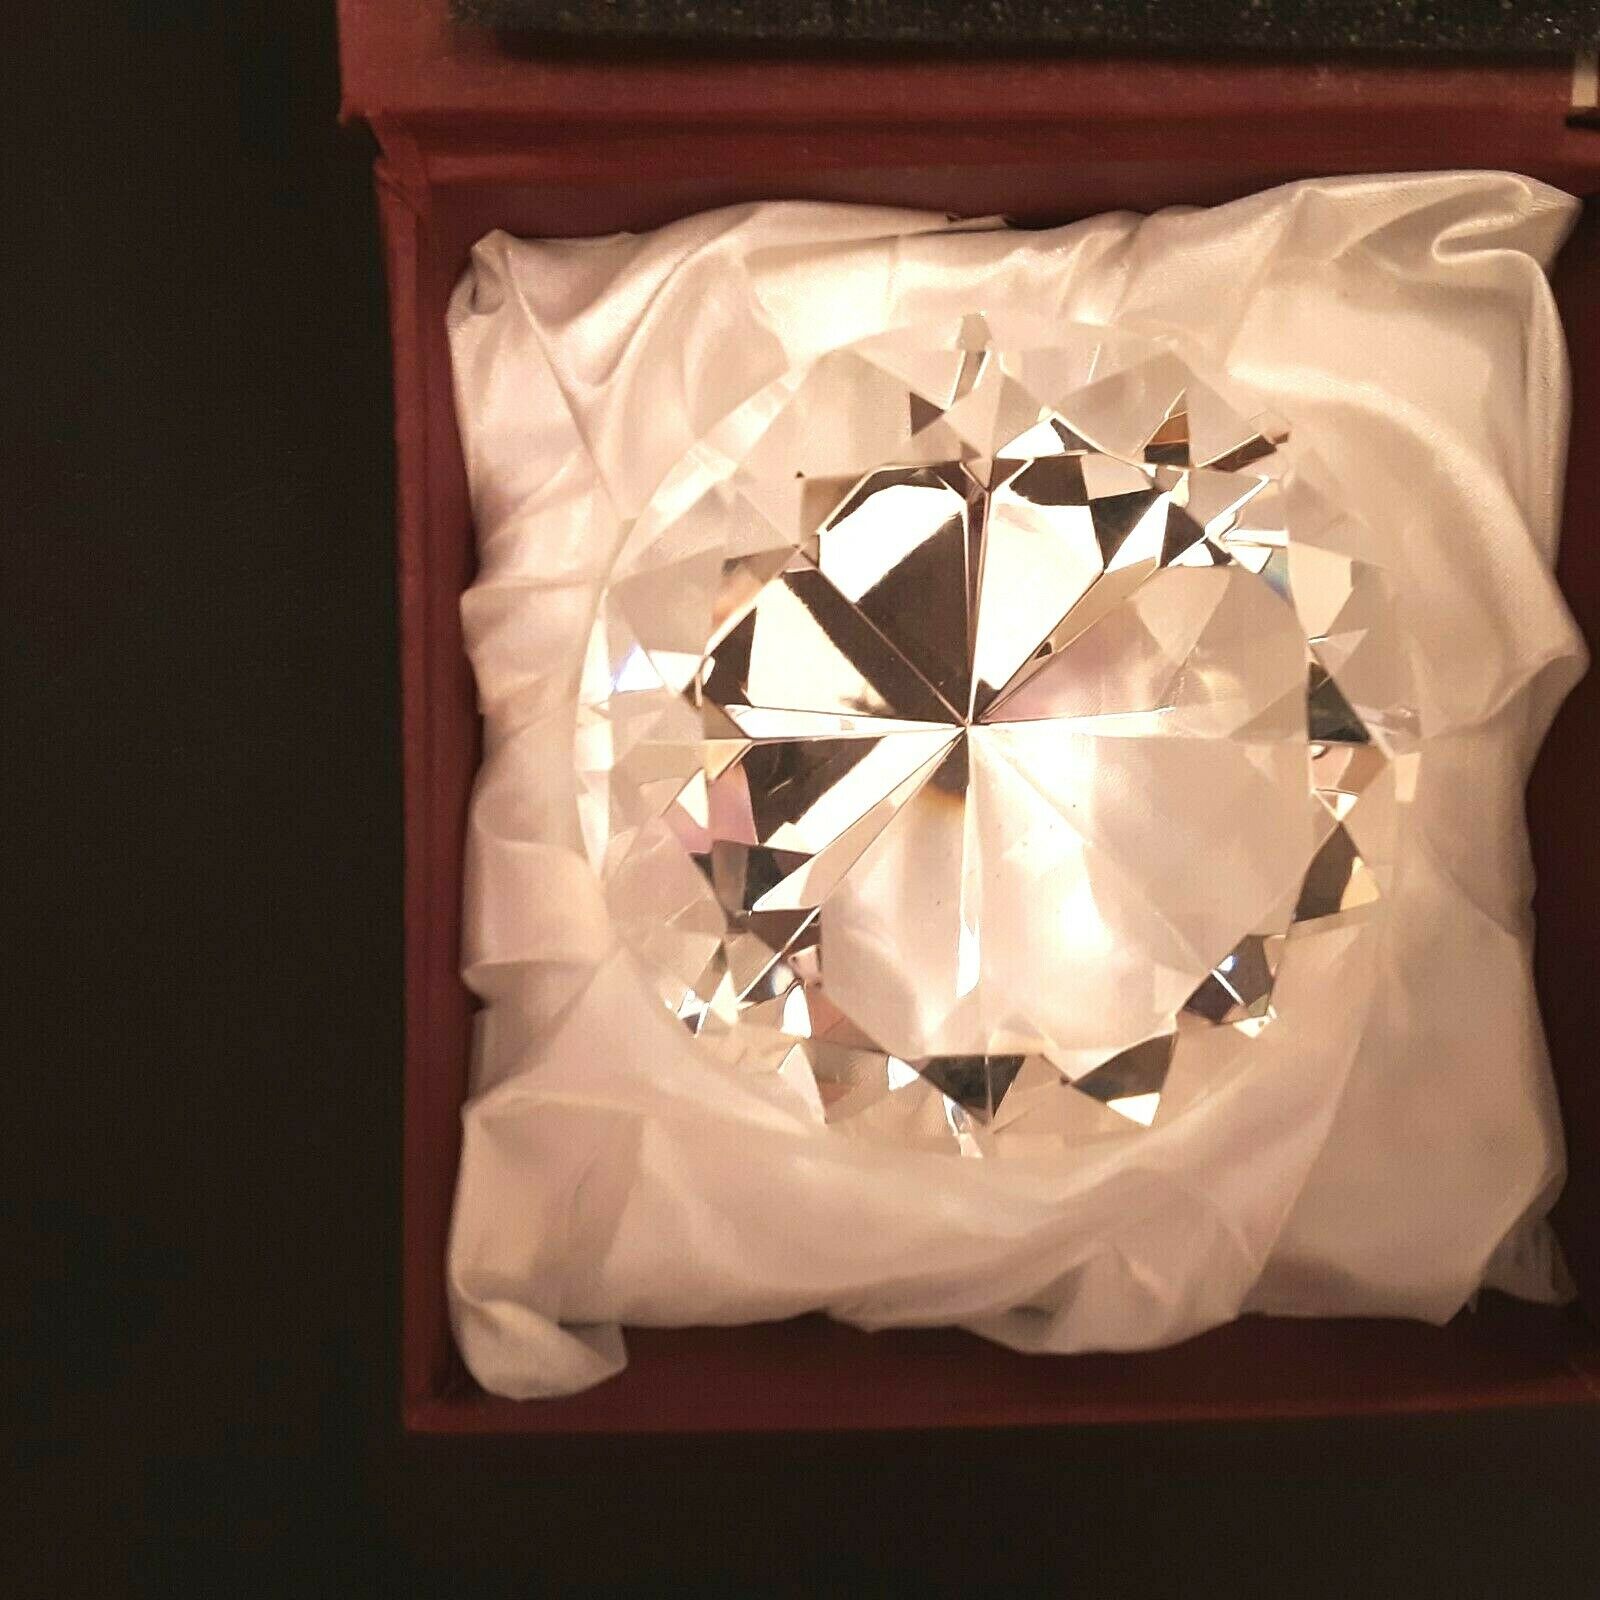 Optic Crystal Diamond 3 1/8 Inch Paperweight Wedding Display Award In Gift Box